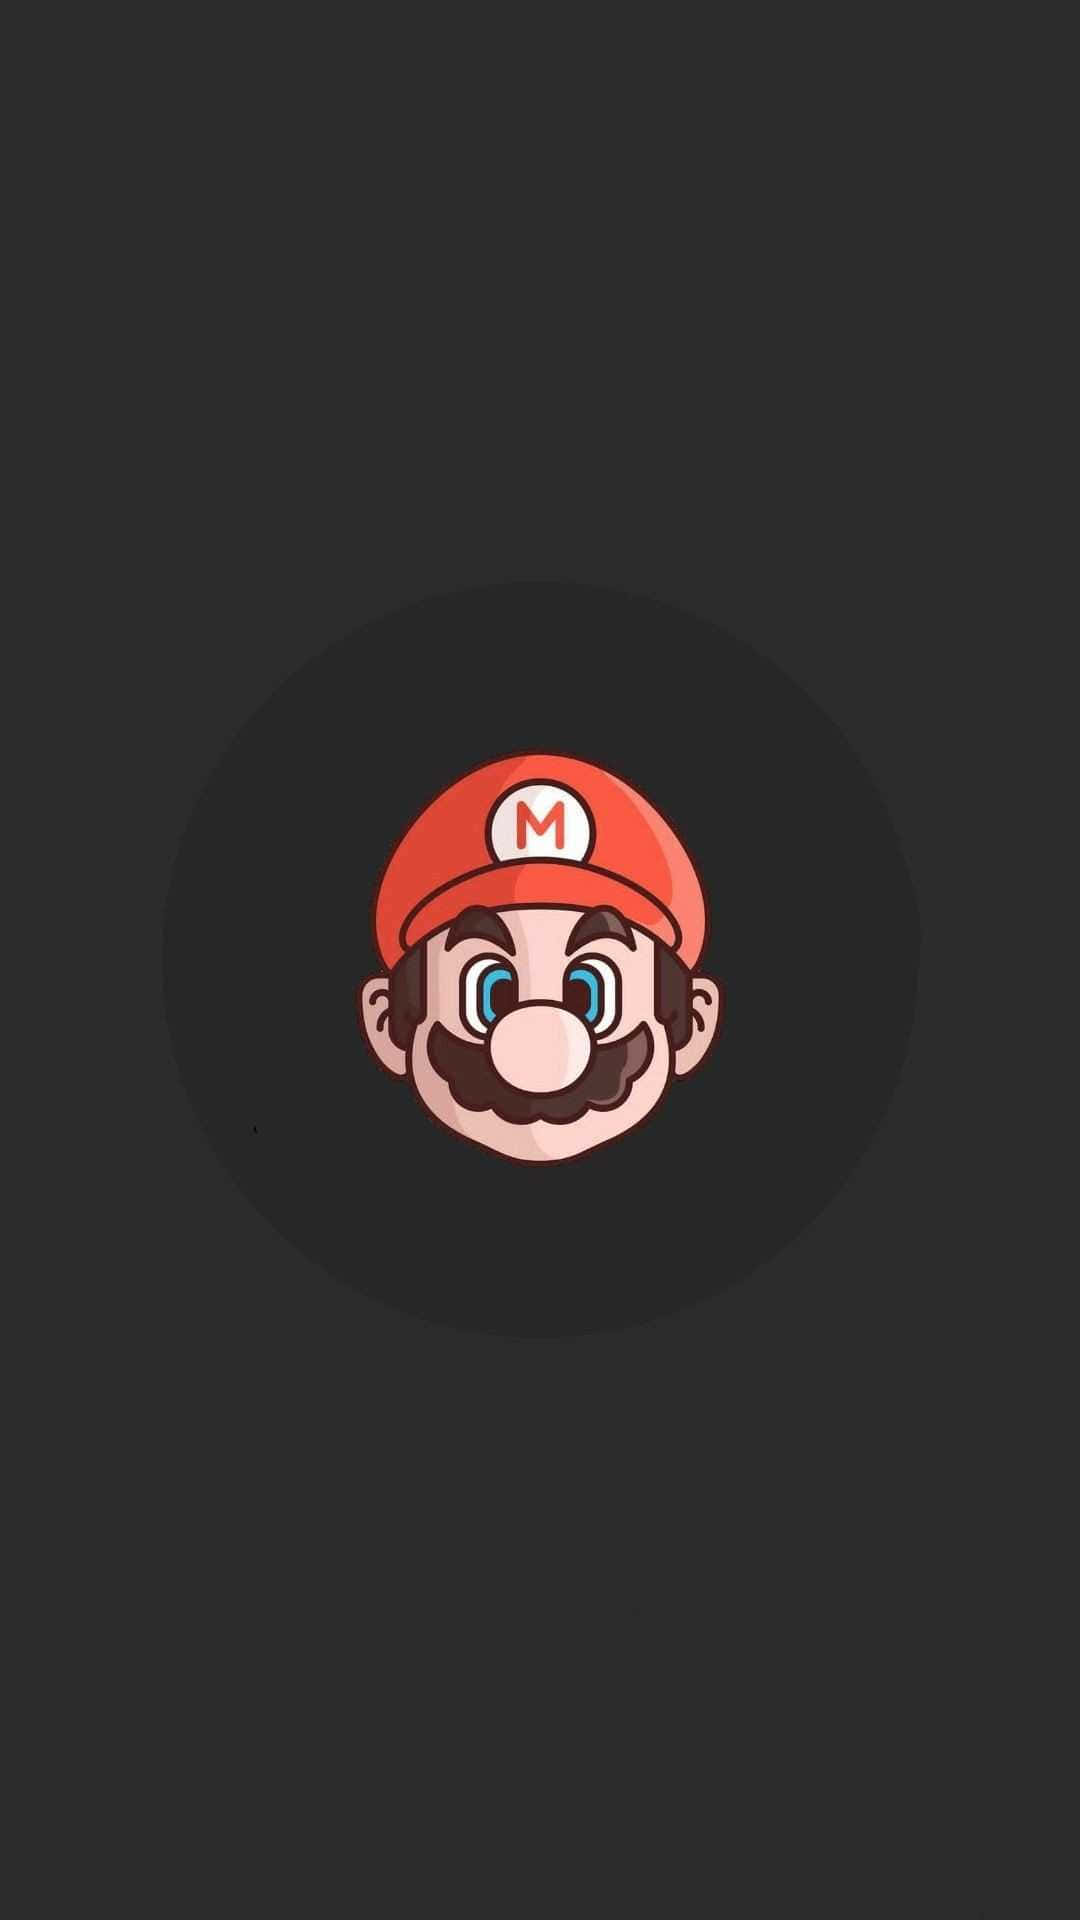 Mario den seje vandrørleder klar til handling. Wallpaper